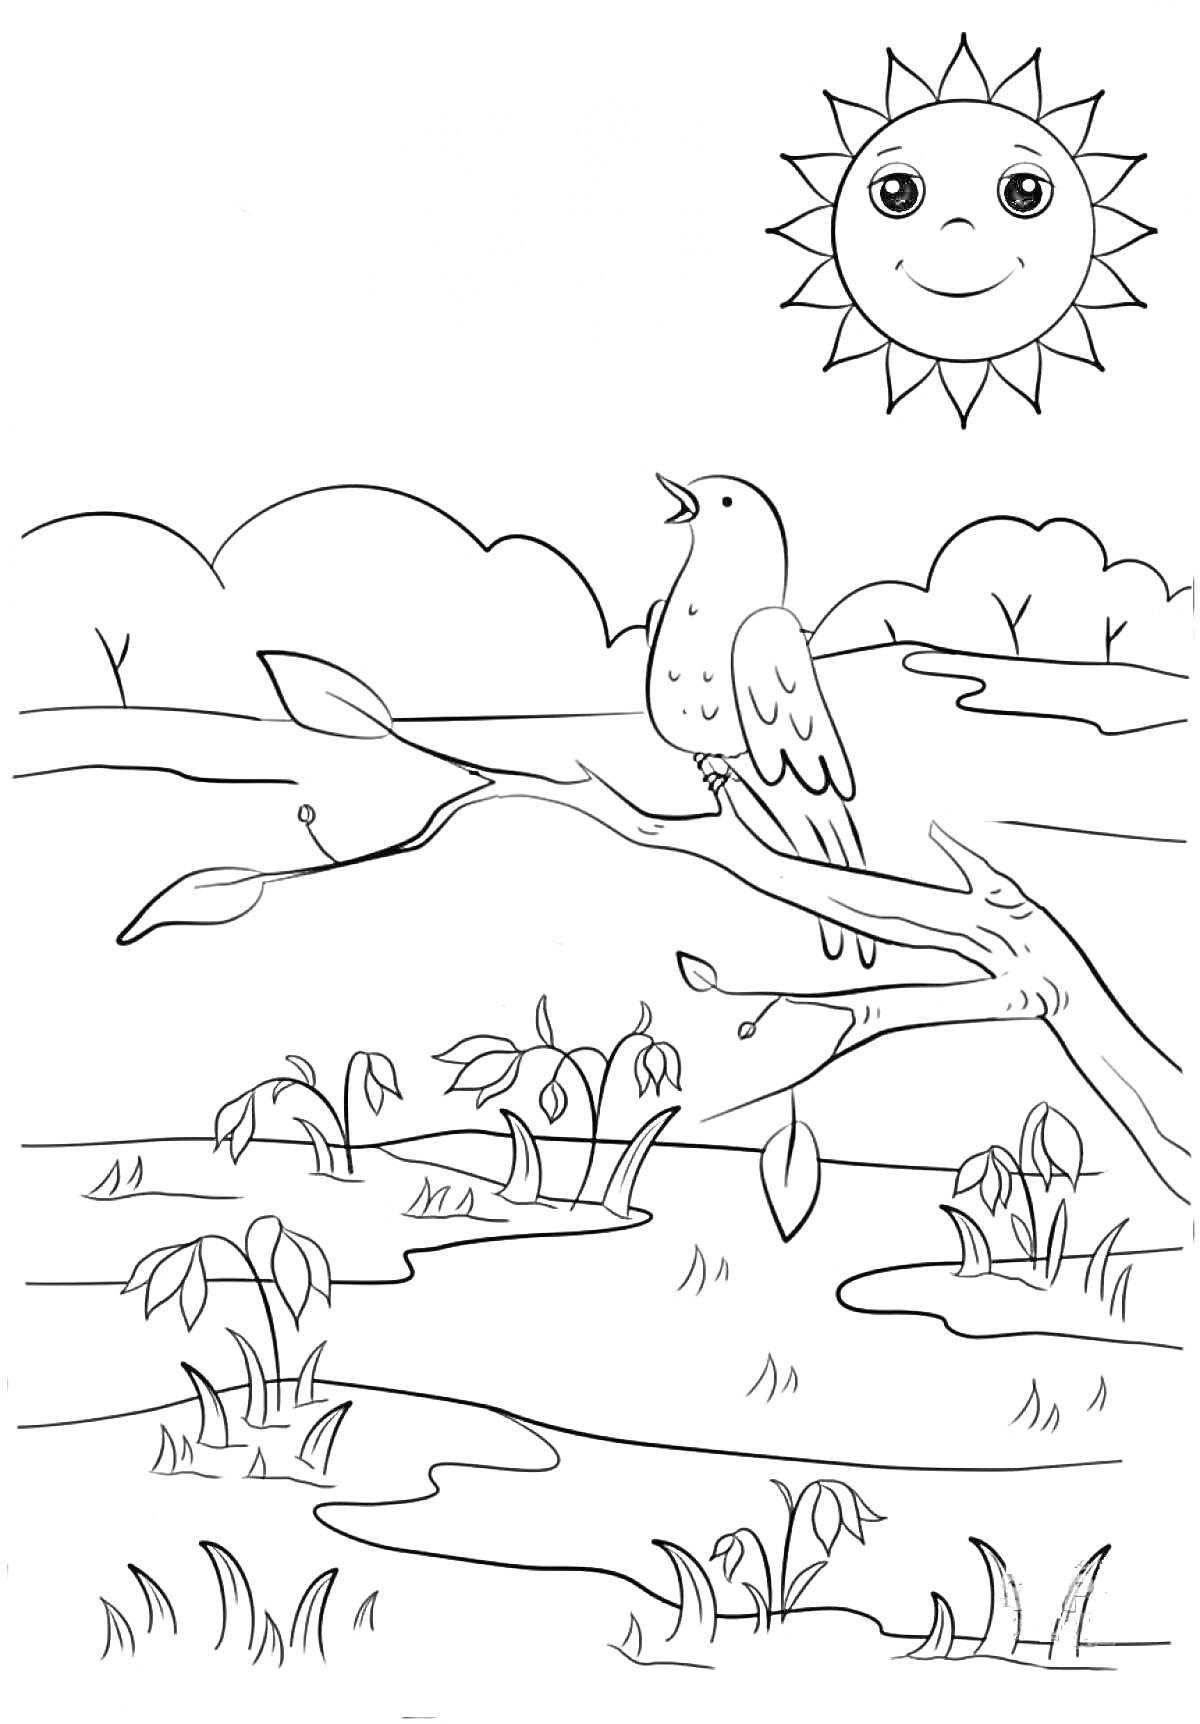 Раскраска Птица на ветке в весеннем пейзаже с цветами, улыбающимся солнцем и облаками